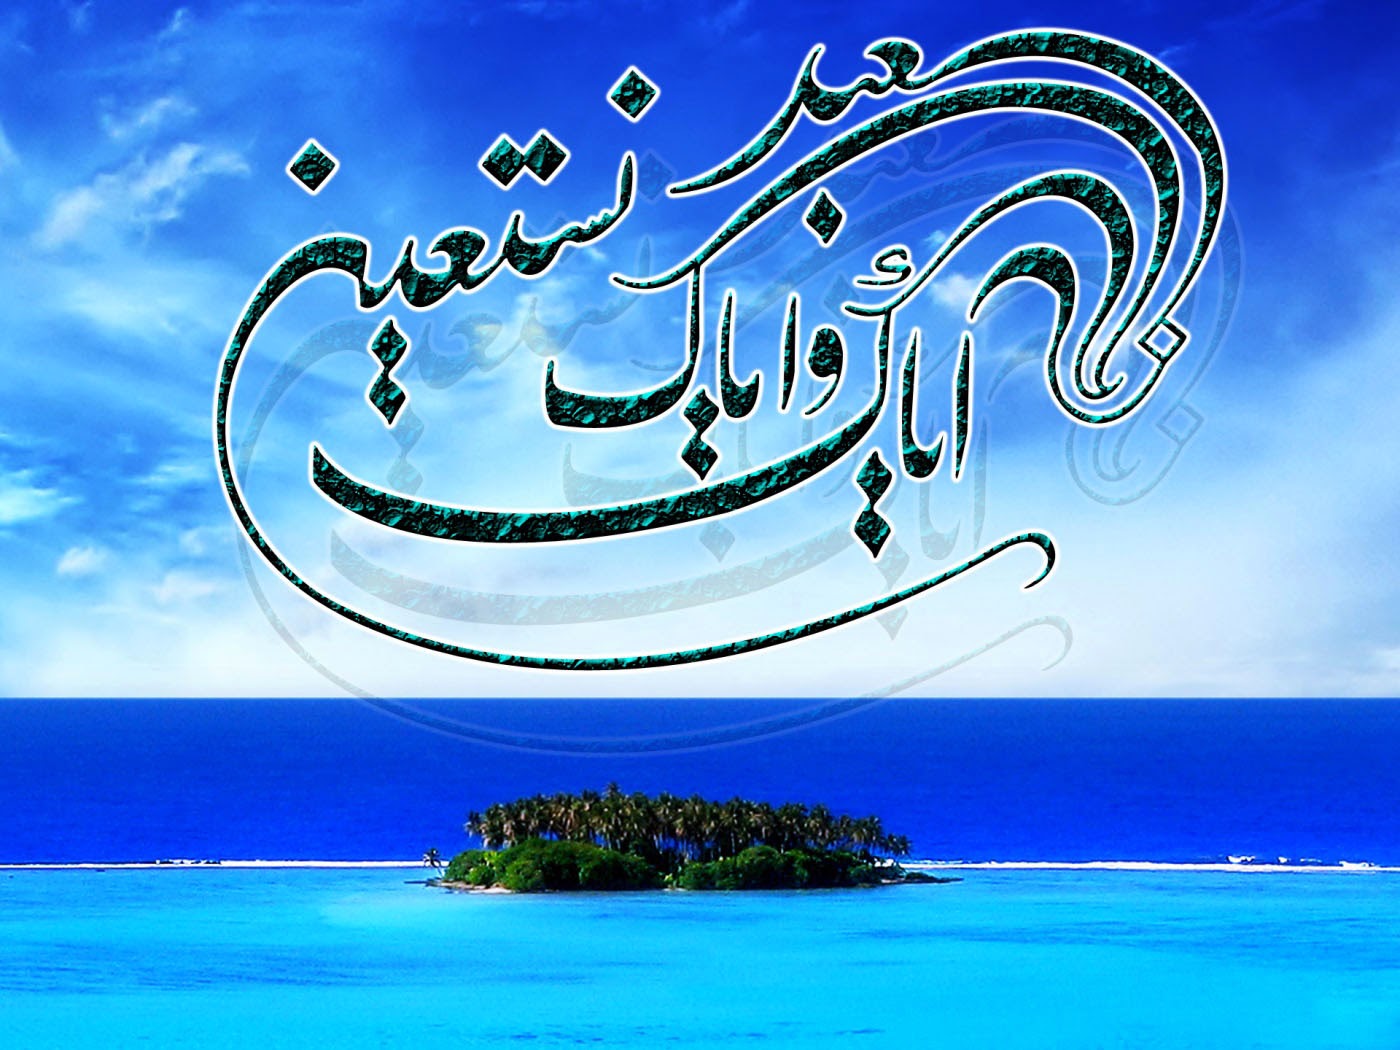 Islamic HD Wallpaper Of Qurani Ayat Free Download ~ Unique ...